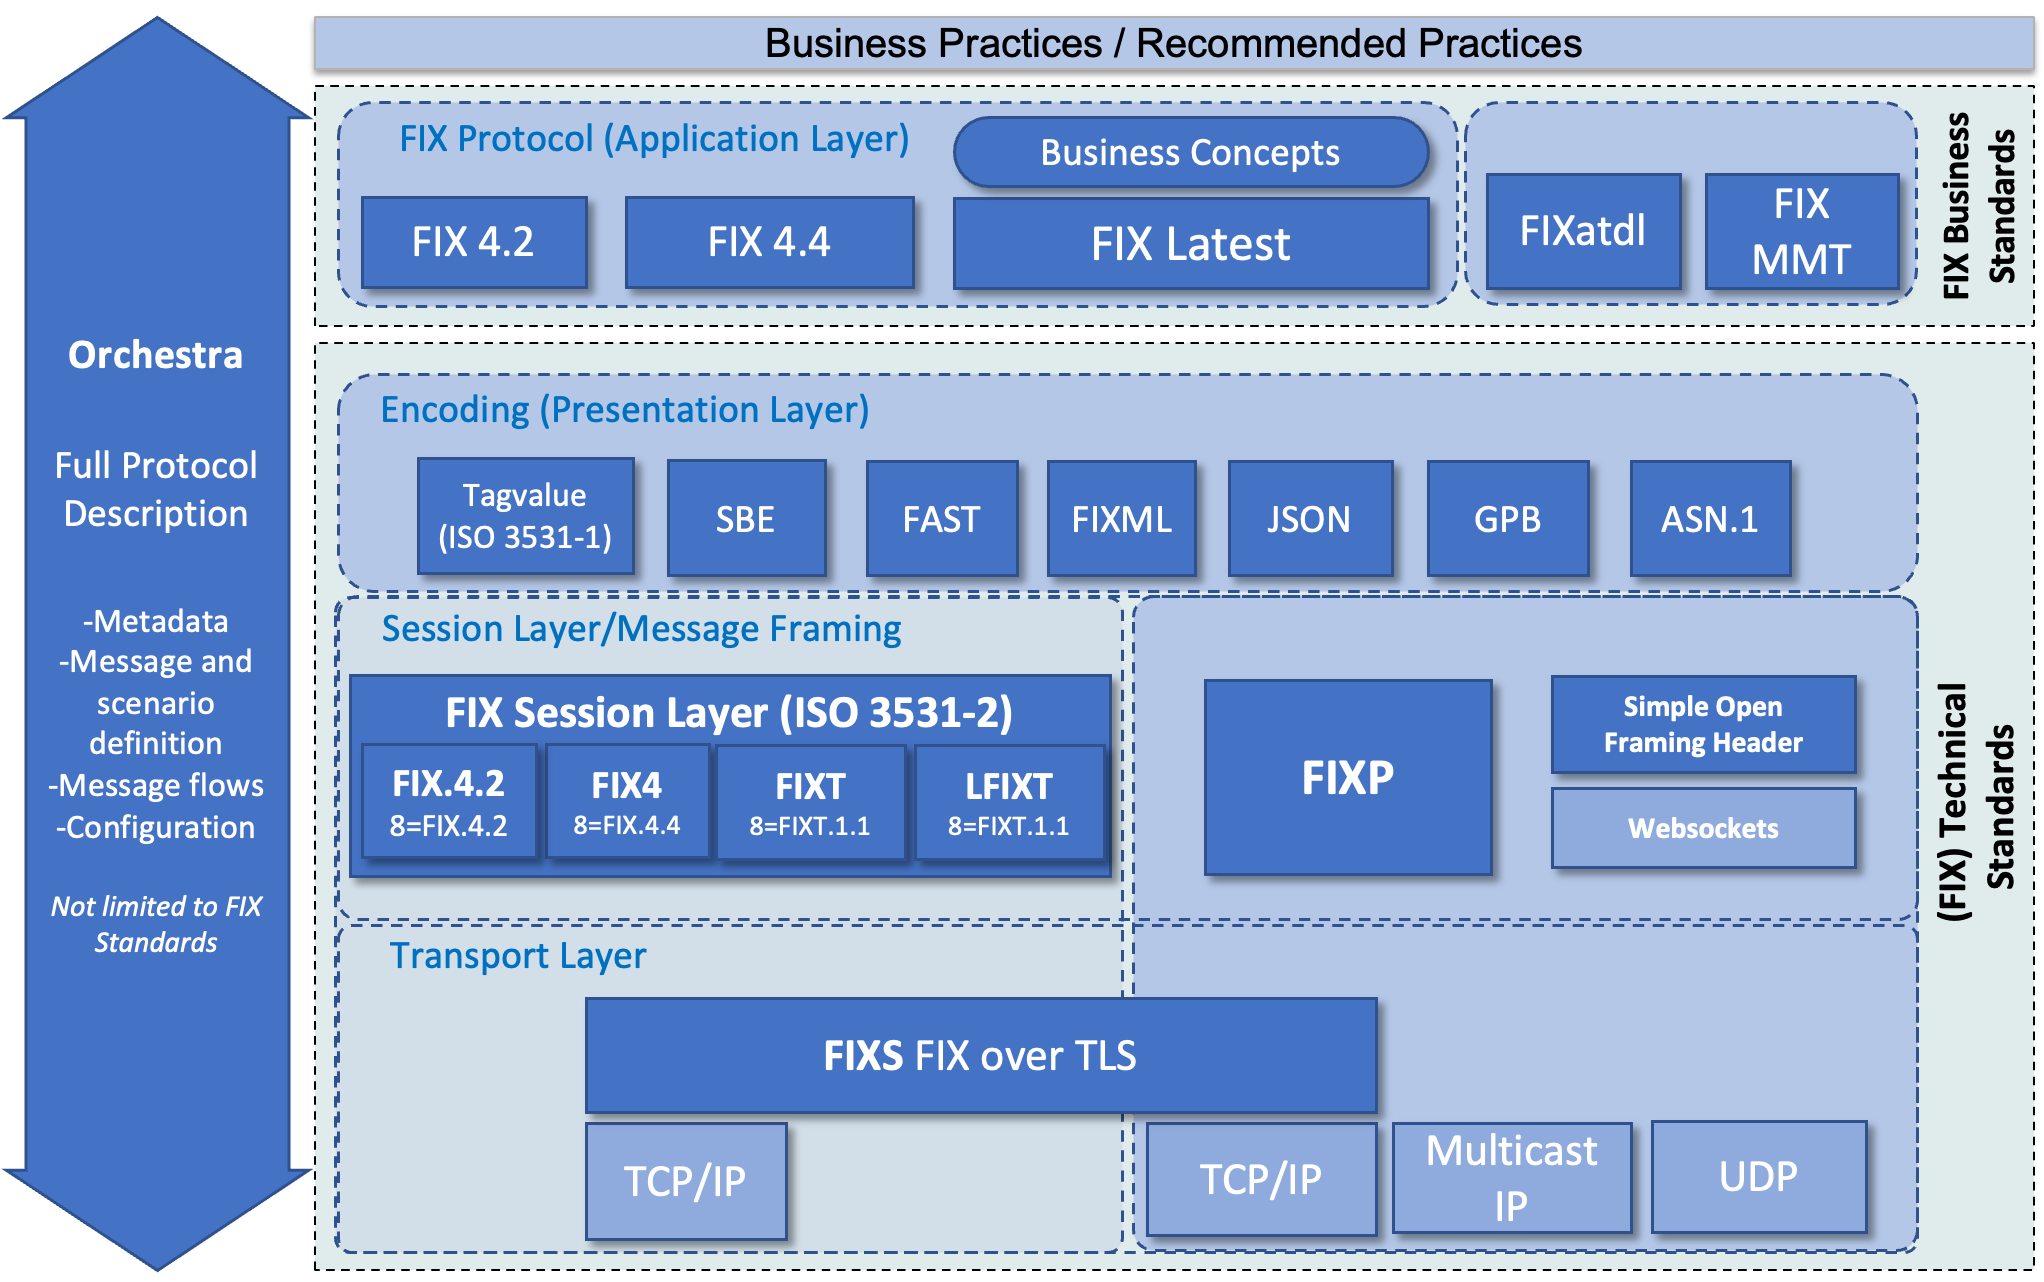 FIX Technical Standard Stack